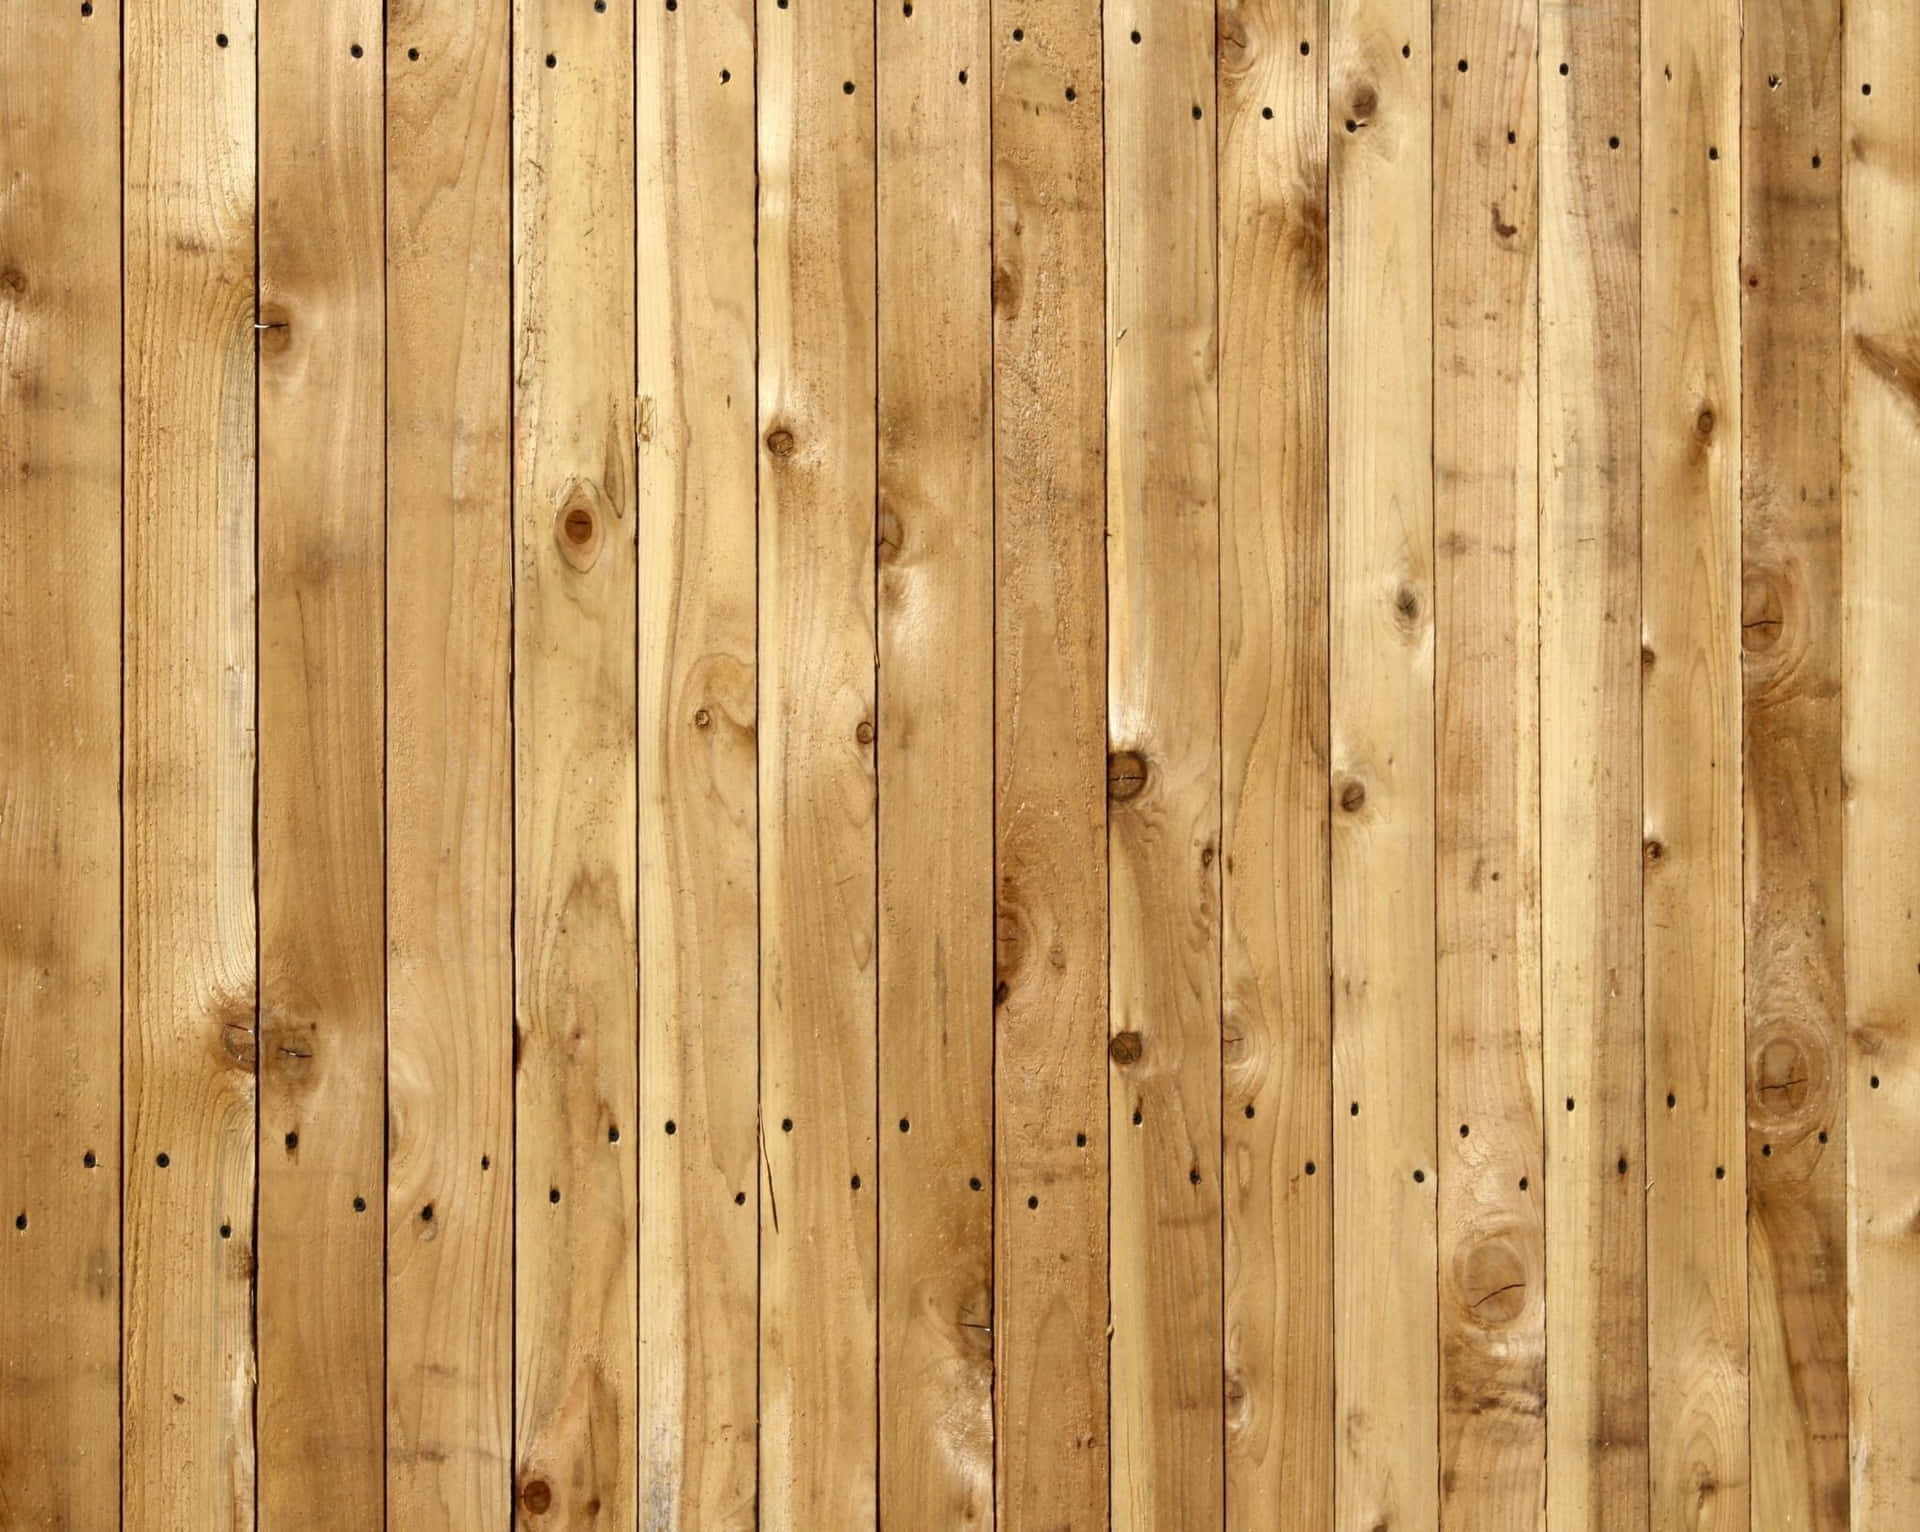 Wood Grain Textured Background